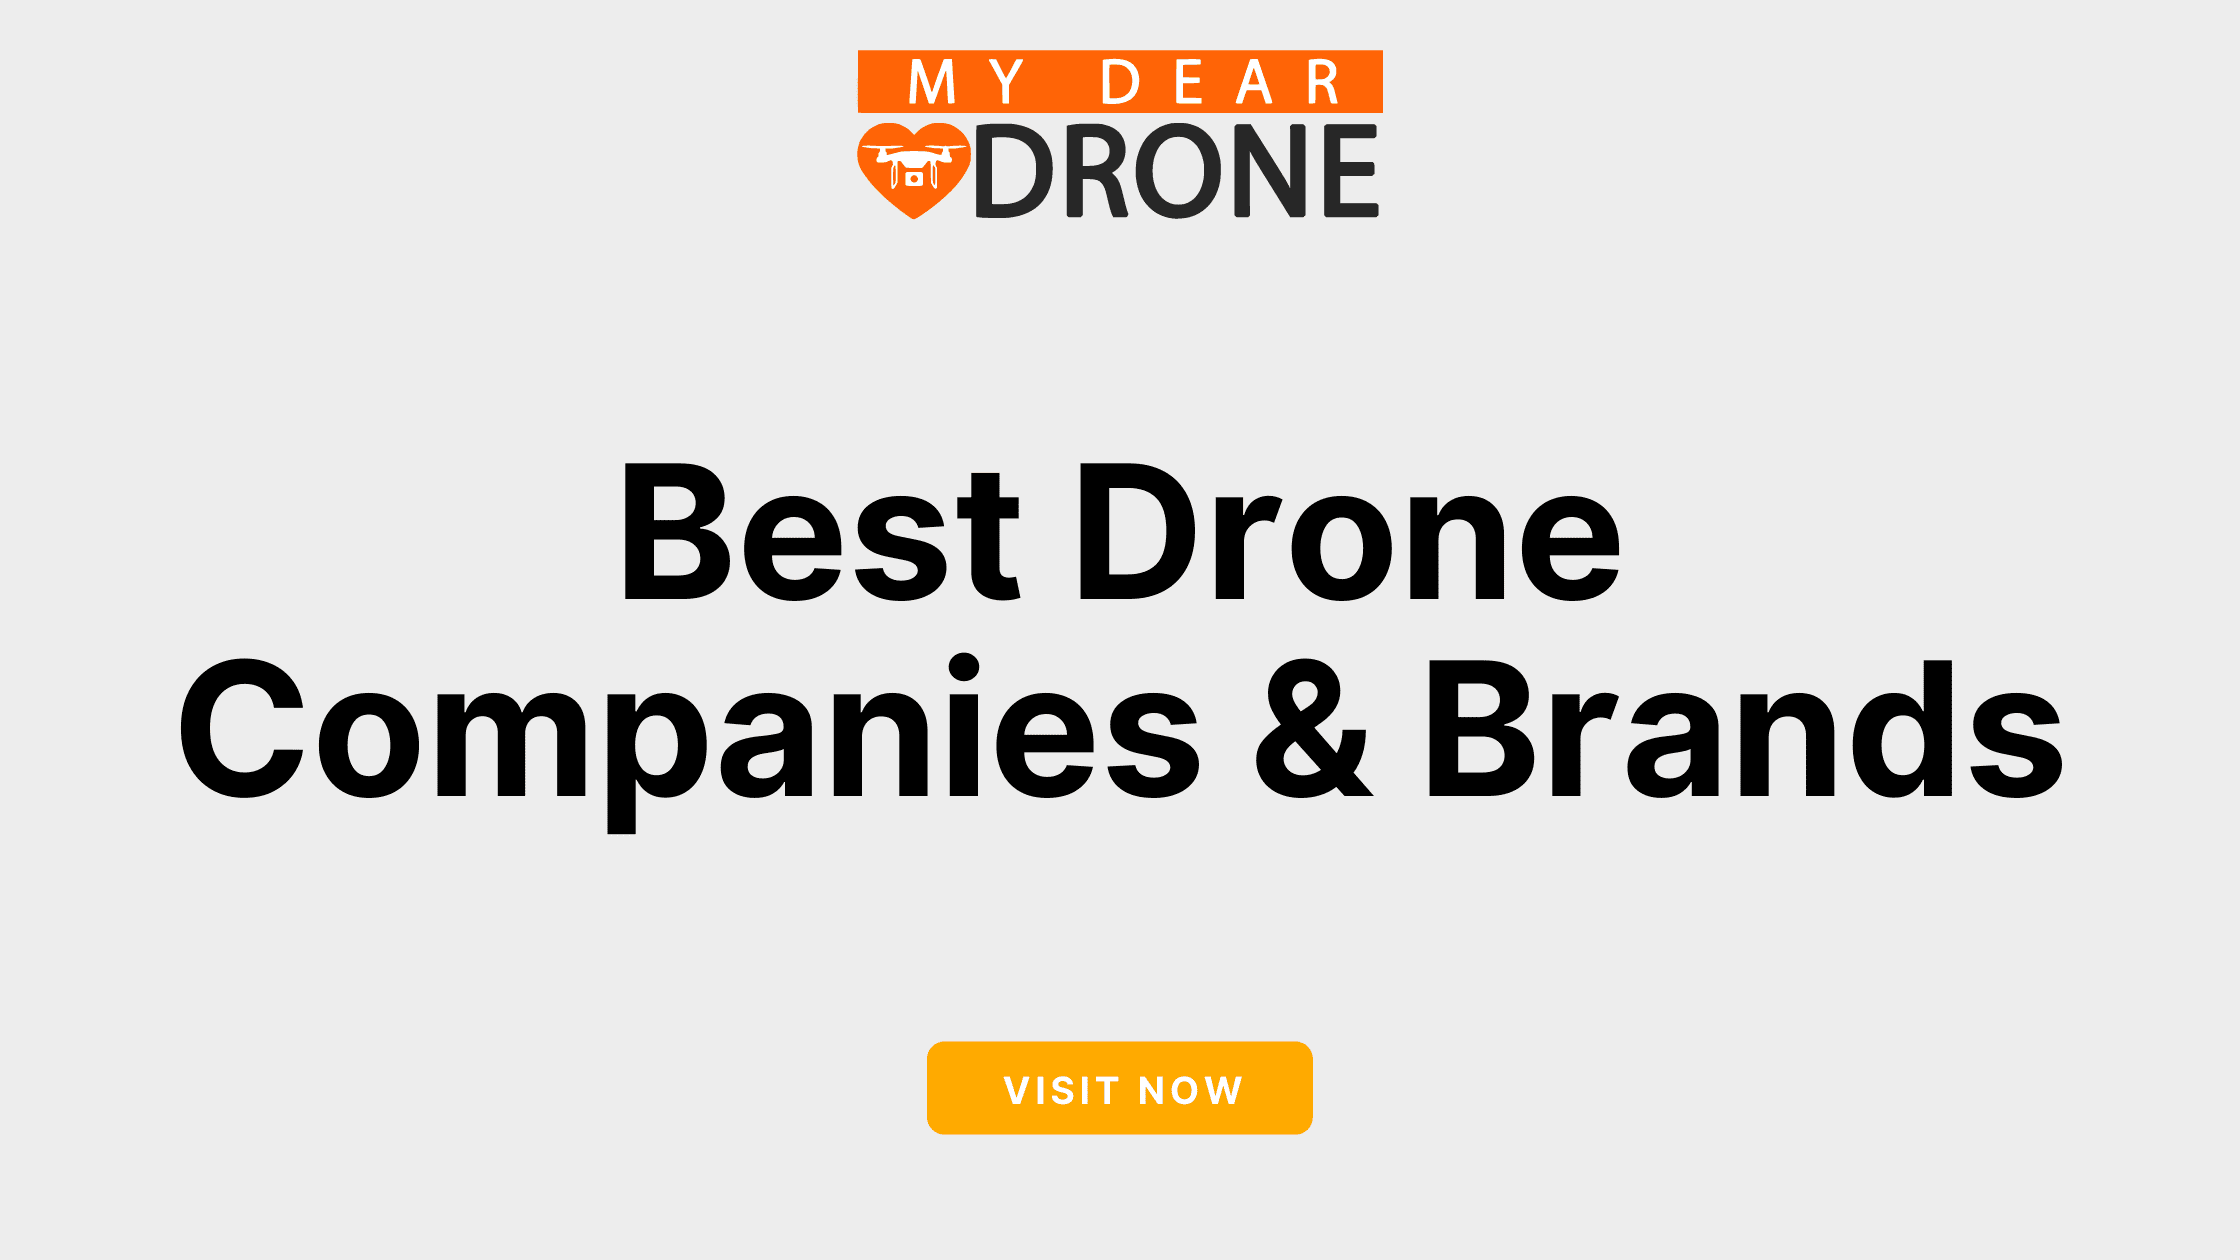 mydeardrone.com